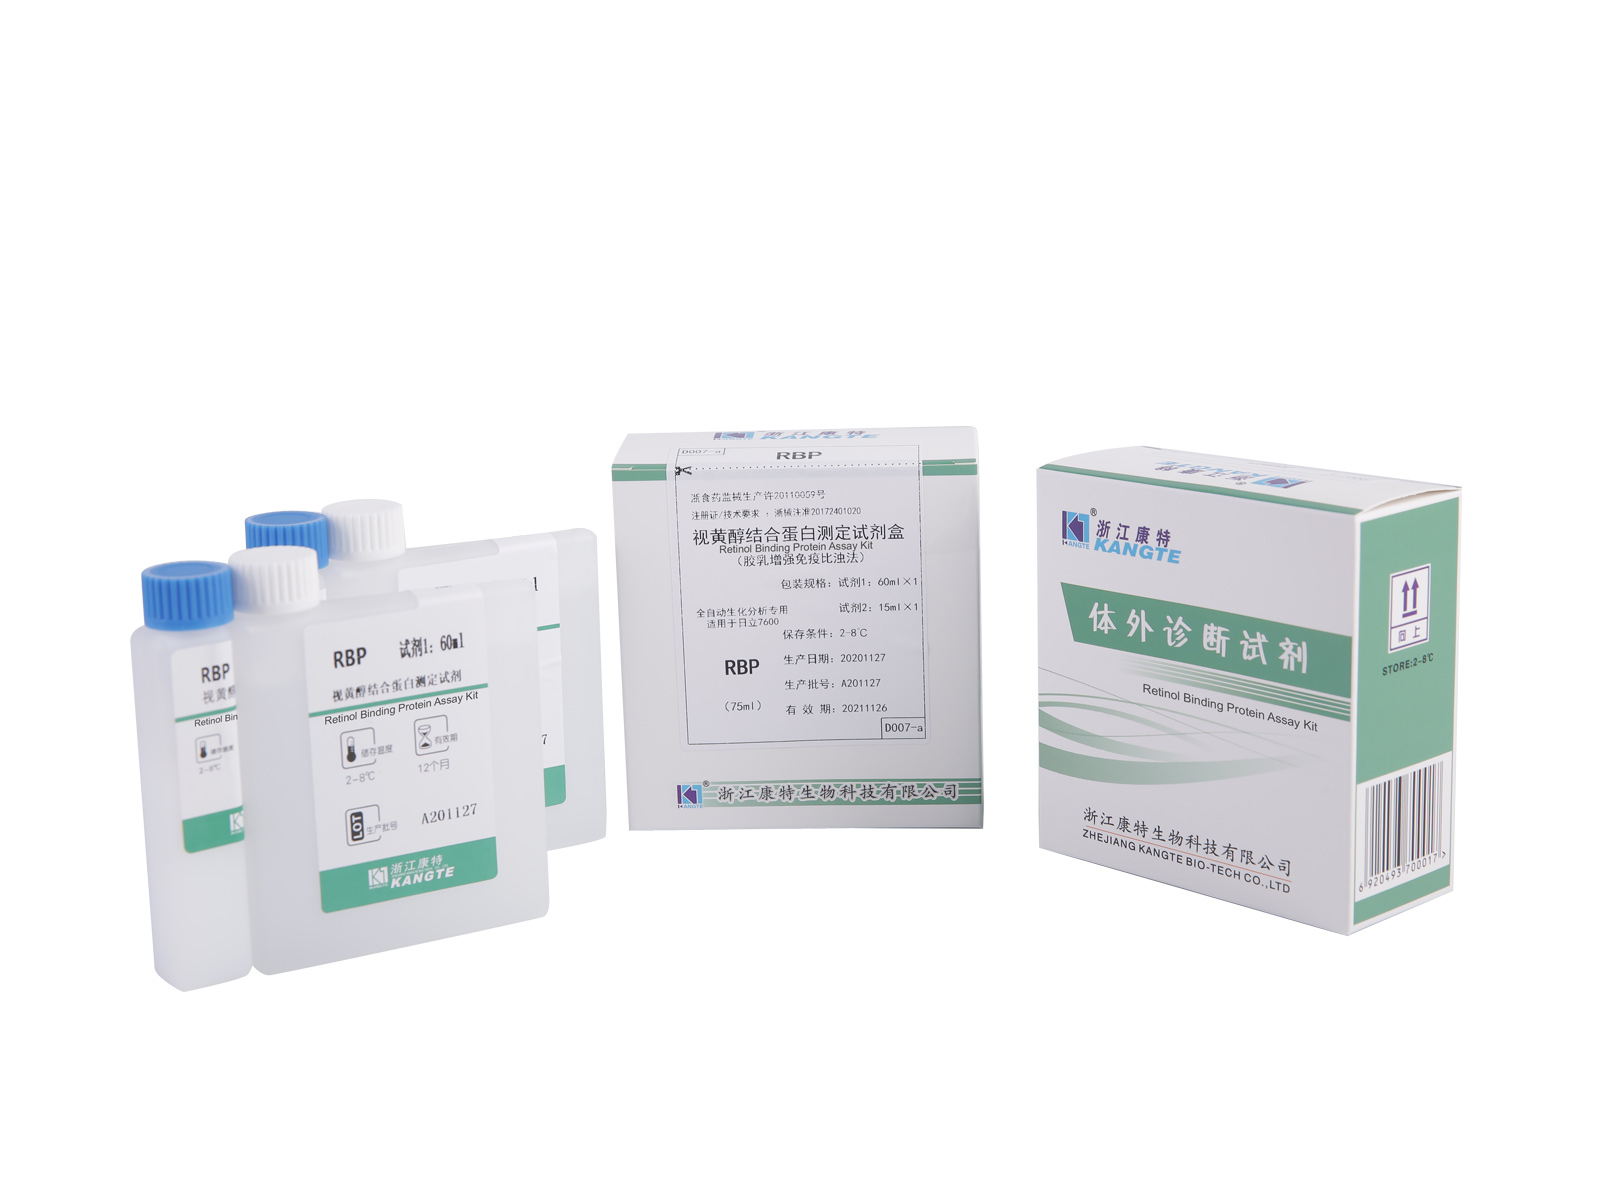 【RBP】 Retinol Binding Protein Assay Kit (Latex Enhanced Immunoturbidimetrisk Metode)